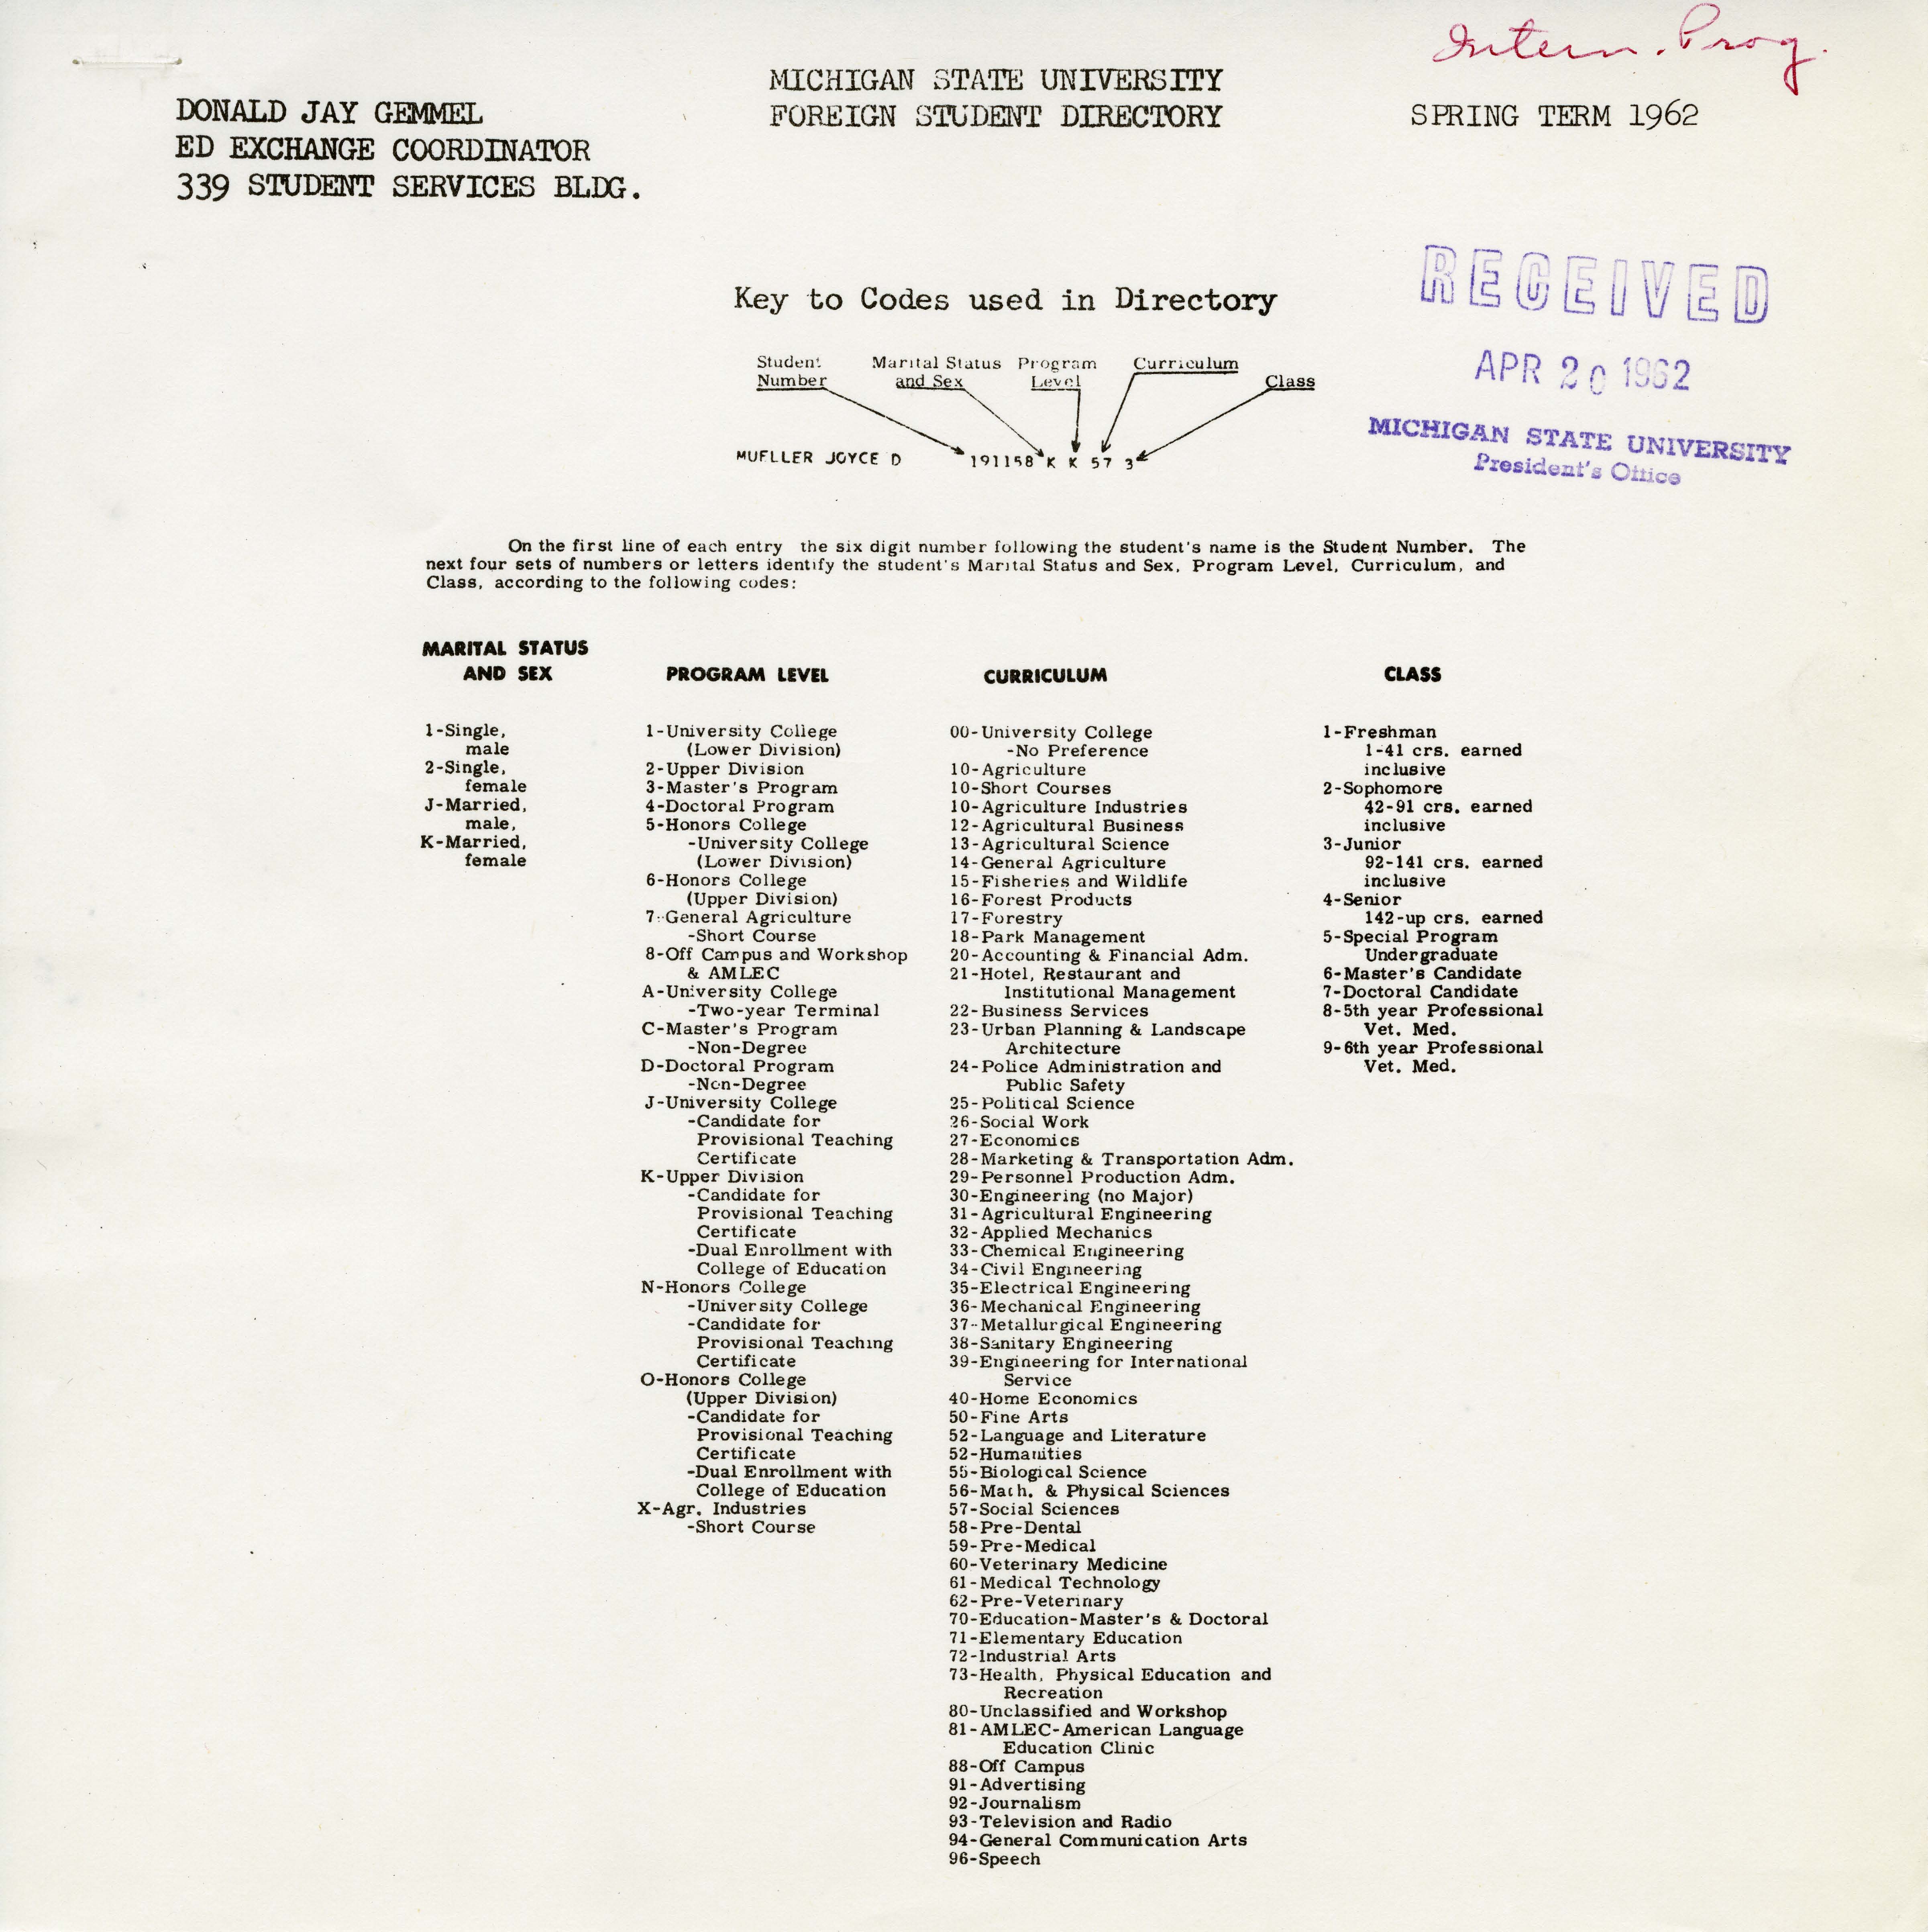 1962 (Spring) International Student Directory